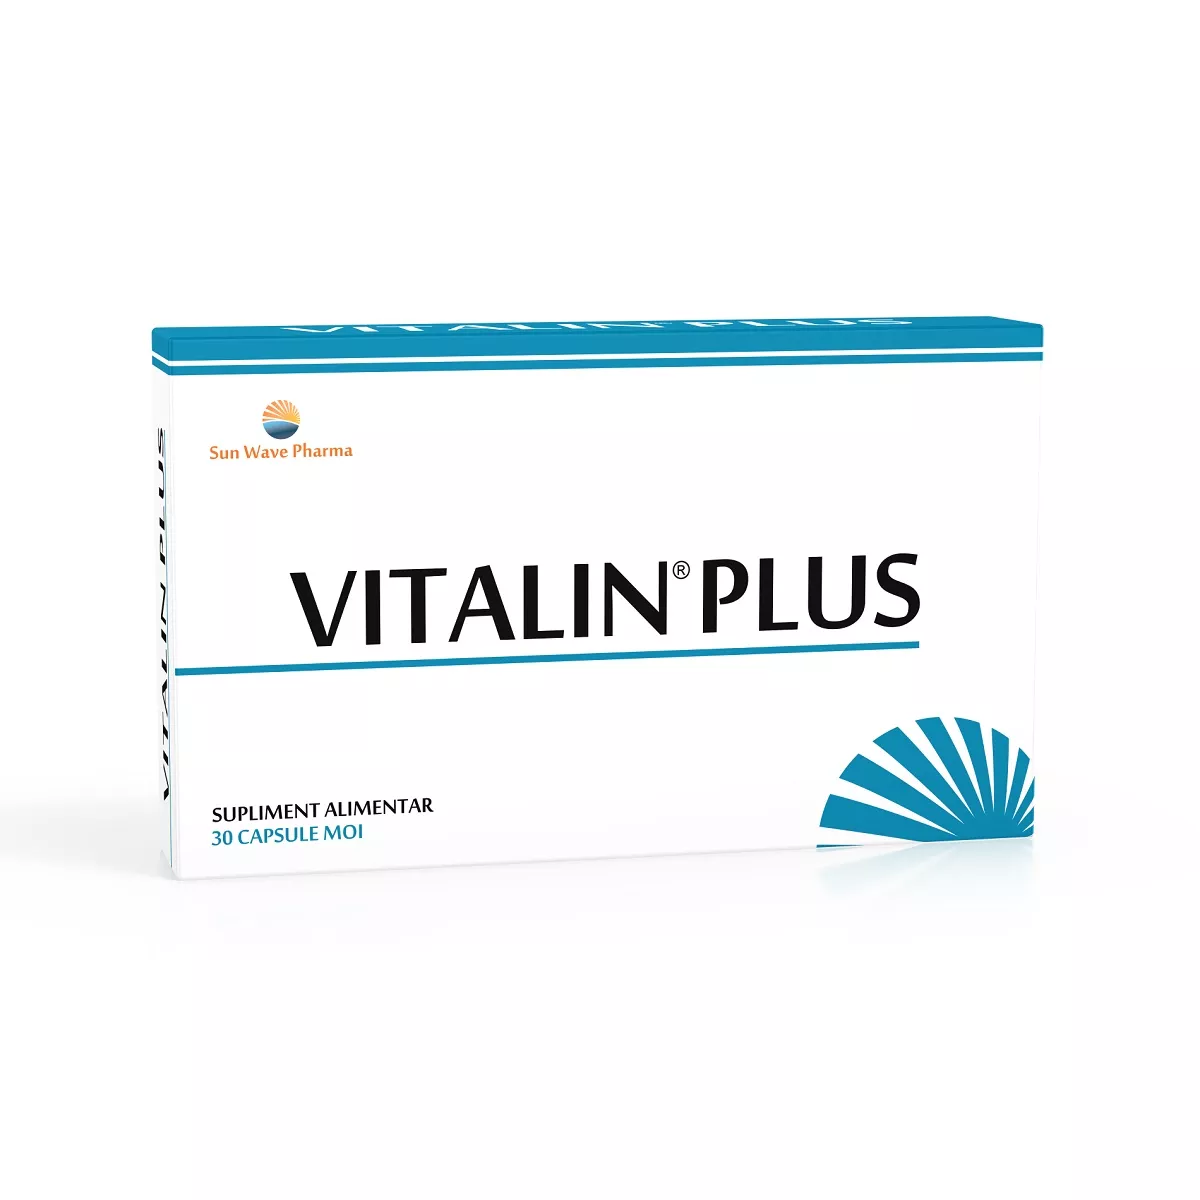 Vitalin Plus, 30 capsule, Sun Wave Pharma, [],nordpharm.ro